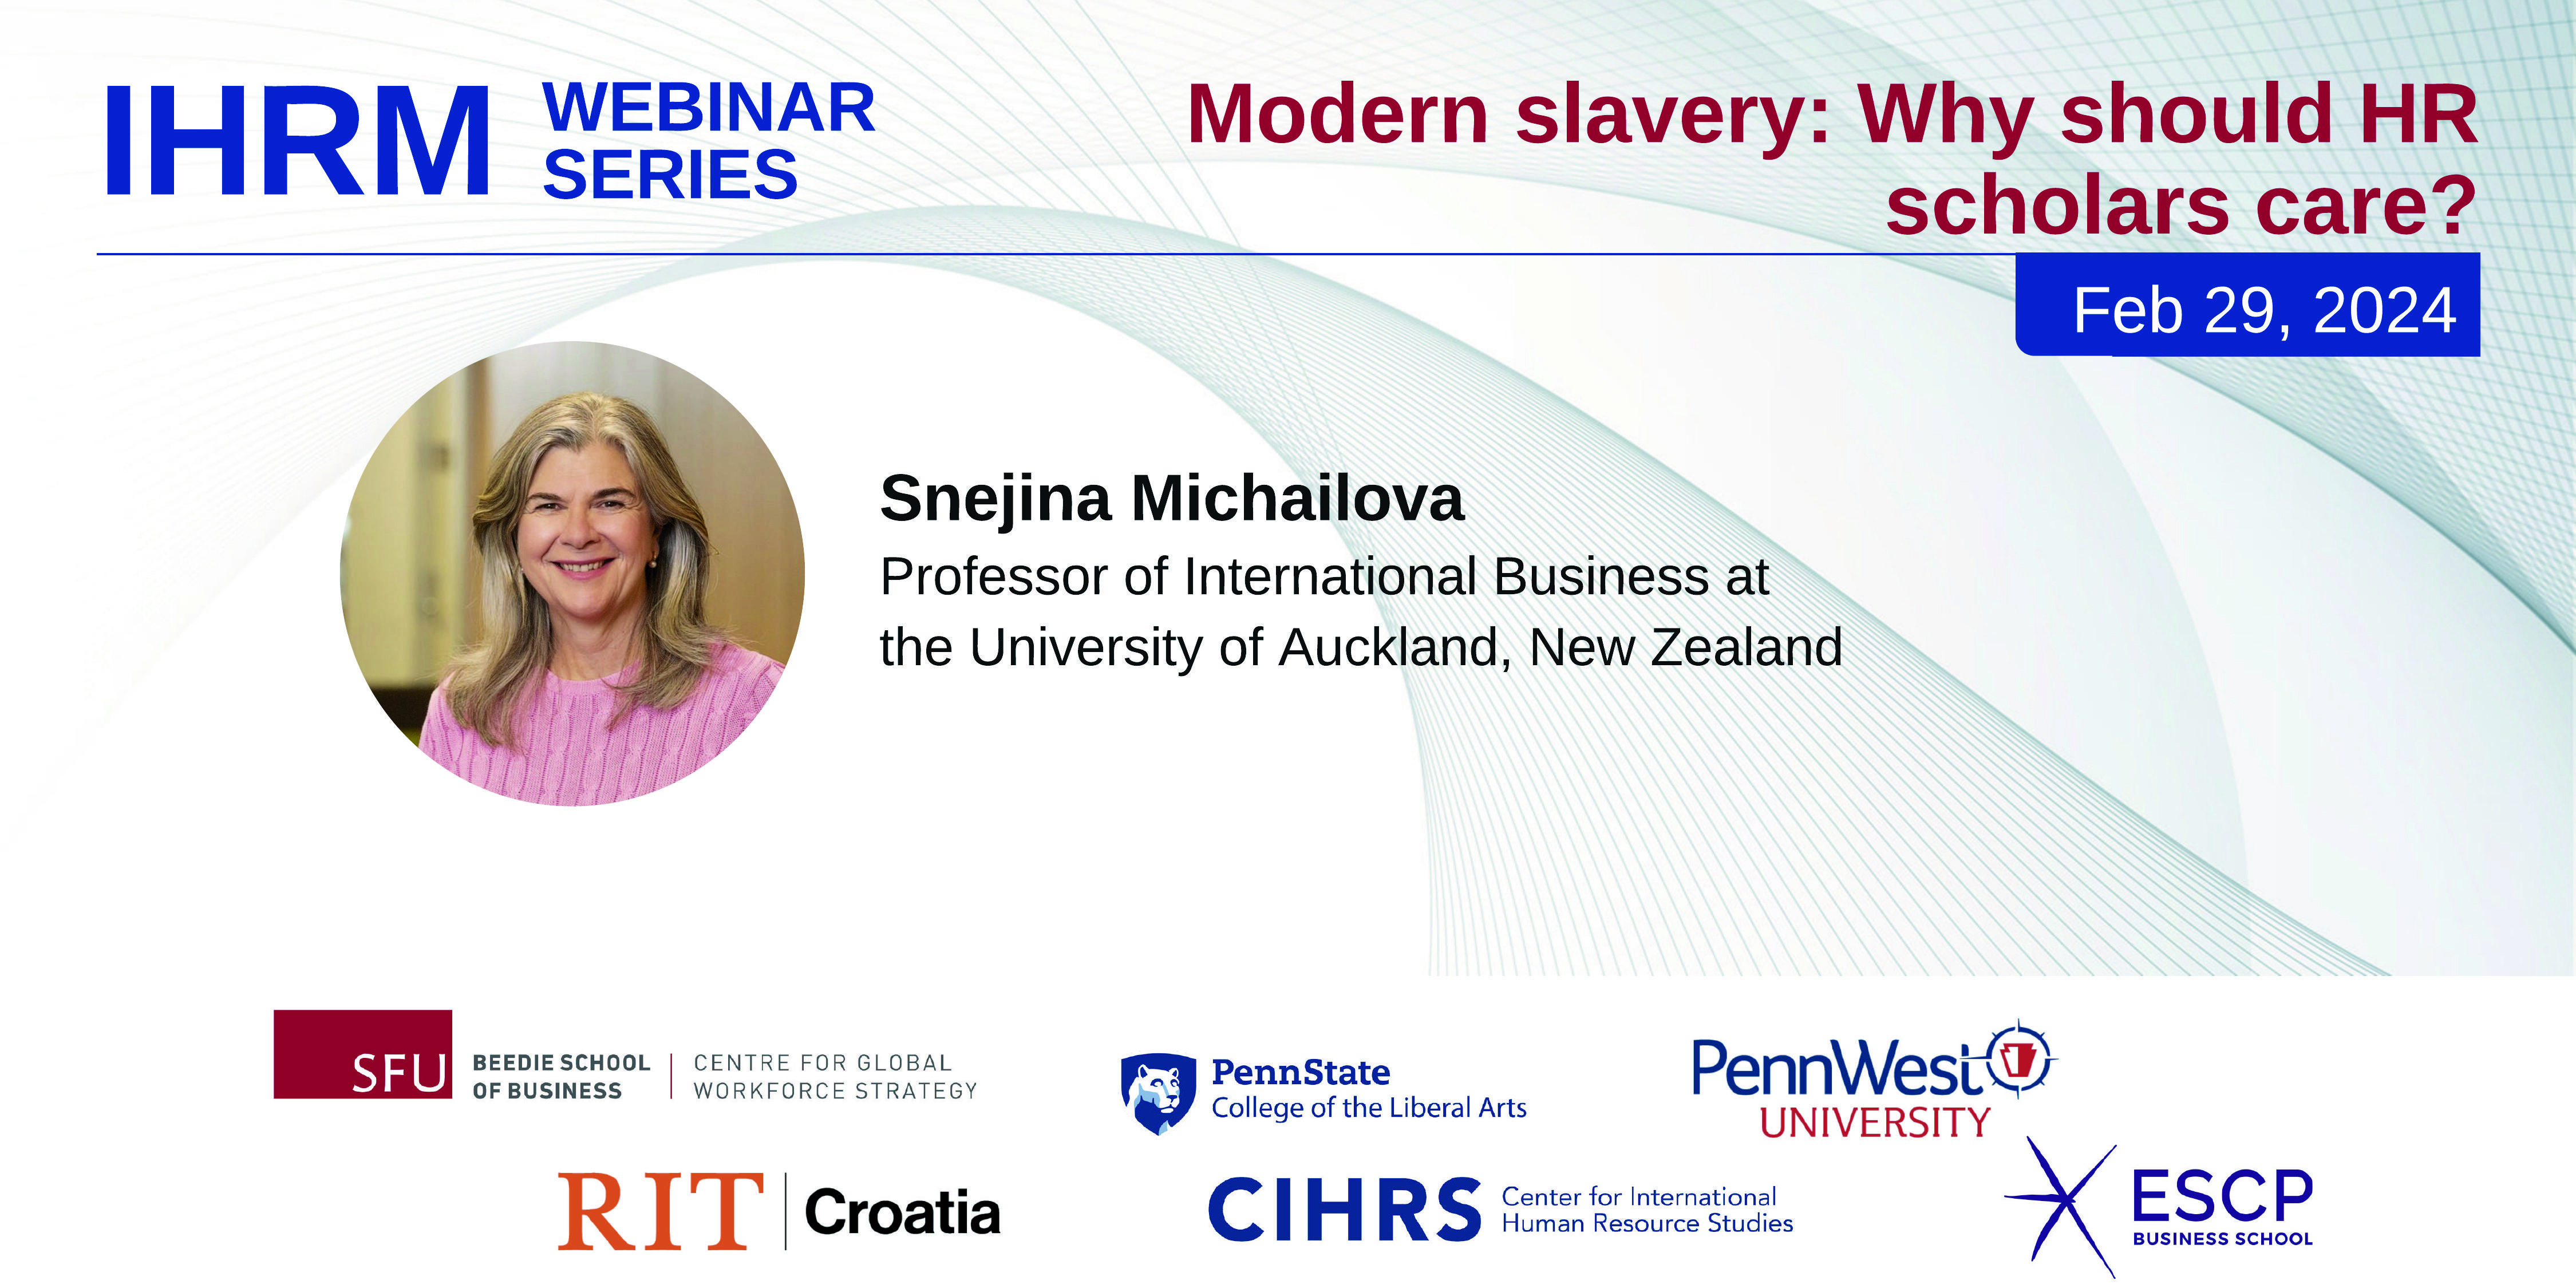 IHRM Webinar with Snejina Michailova - Modern Slavery: Why should HR scholars care?